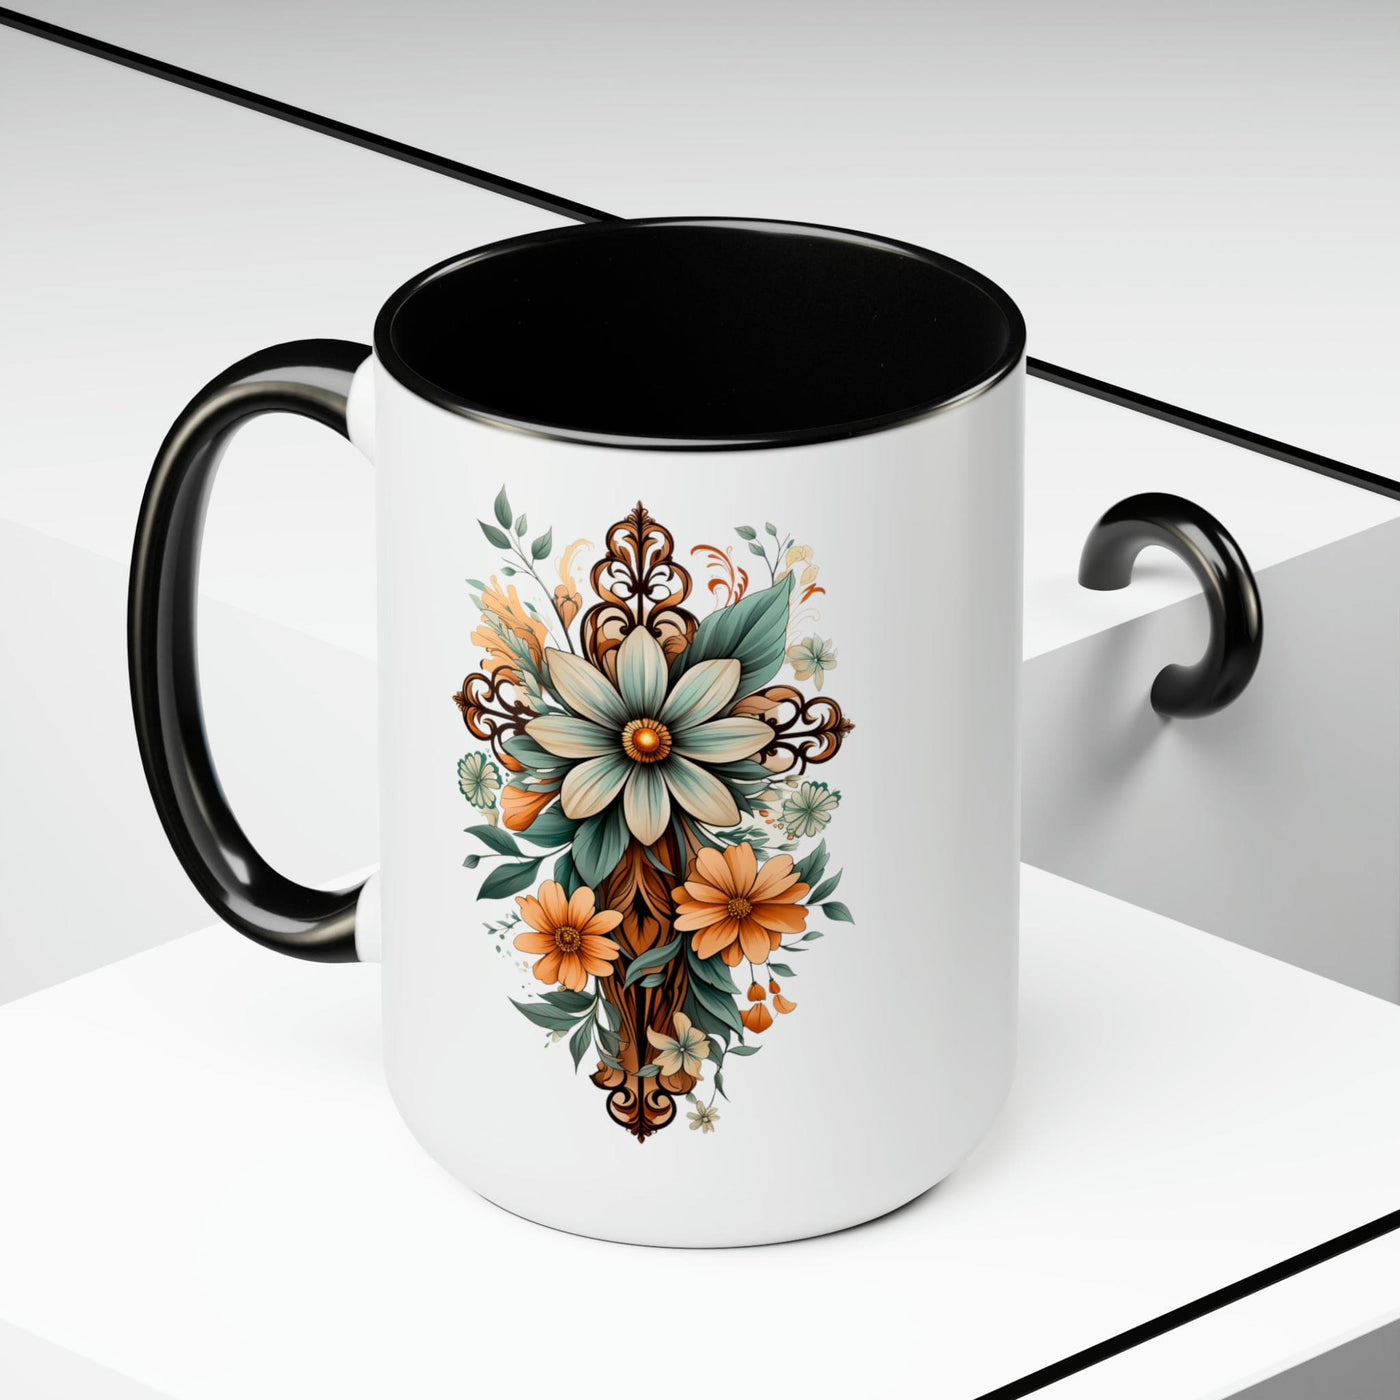 Accent Ceramic Coffee Mug 15oz - Green Brown Christian Cross Floral Bouquet